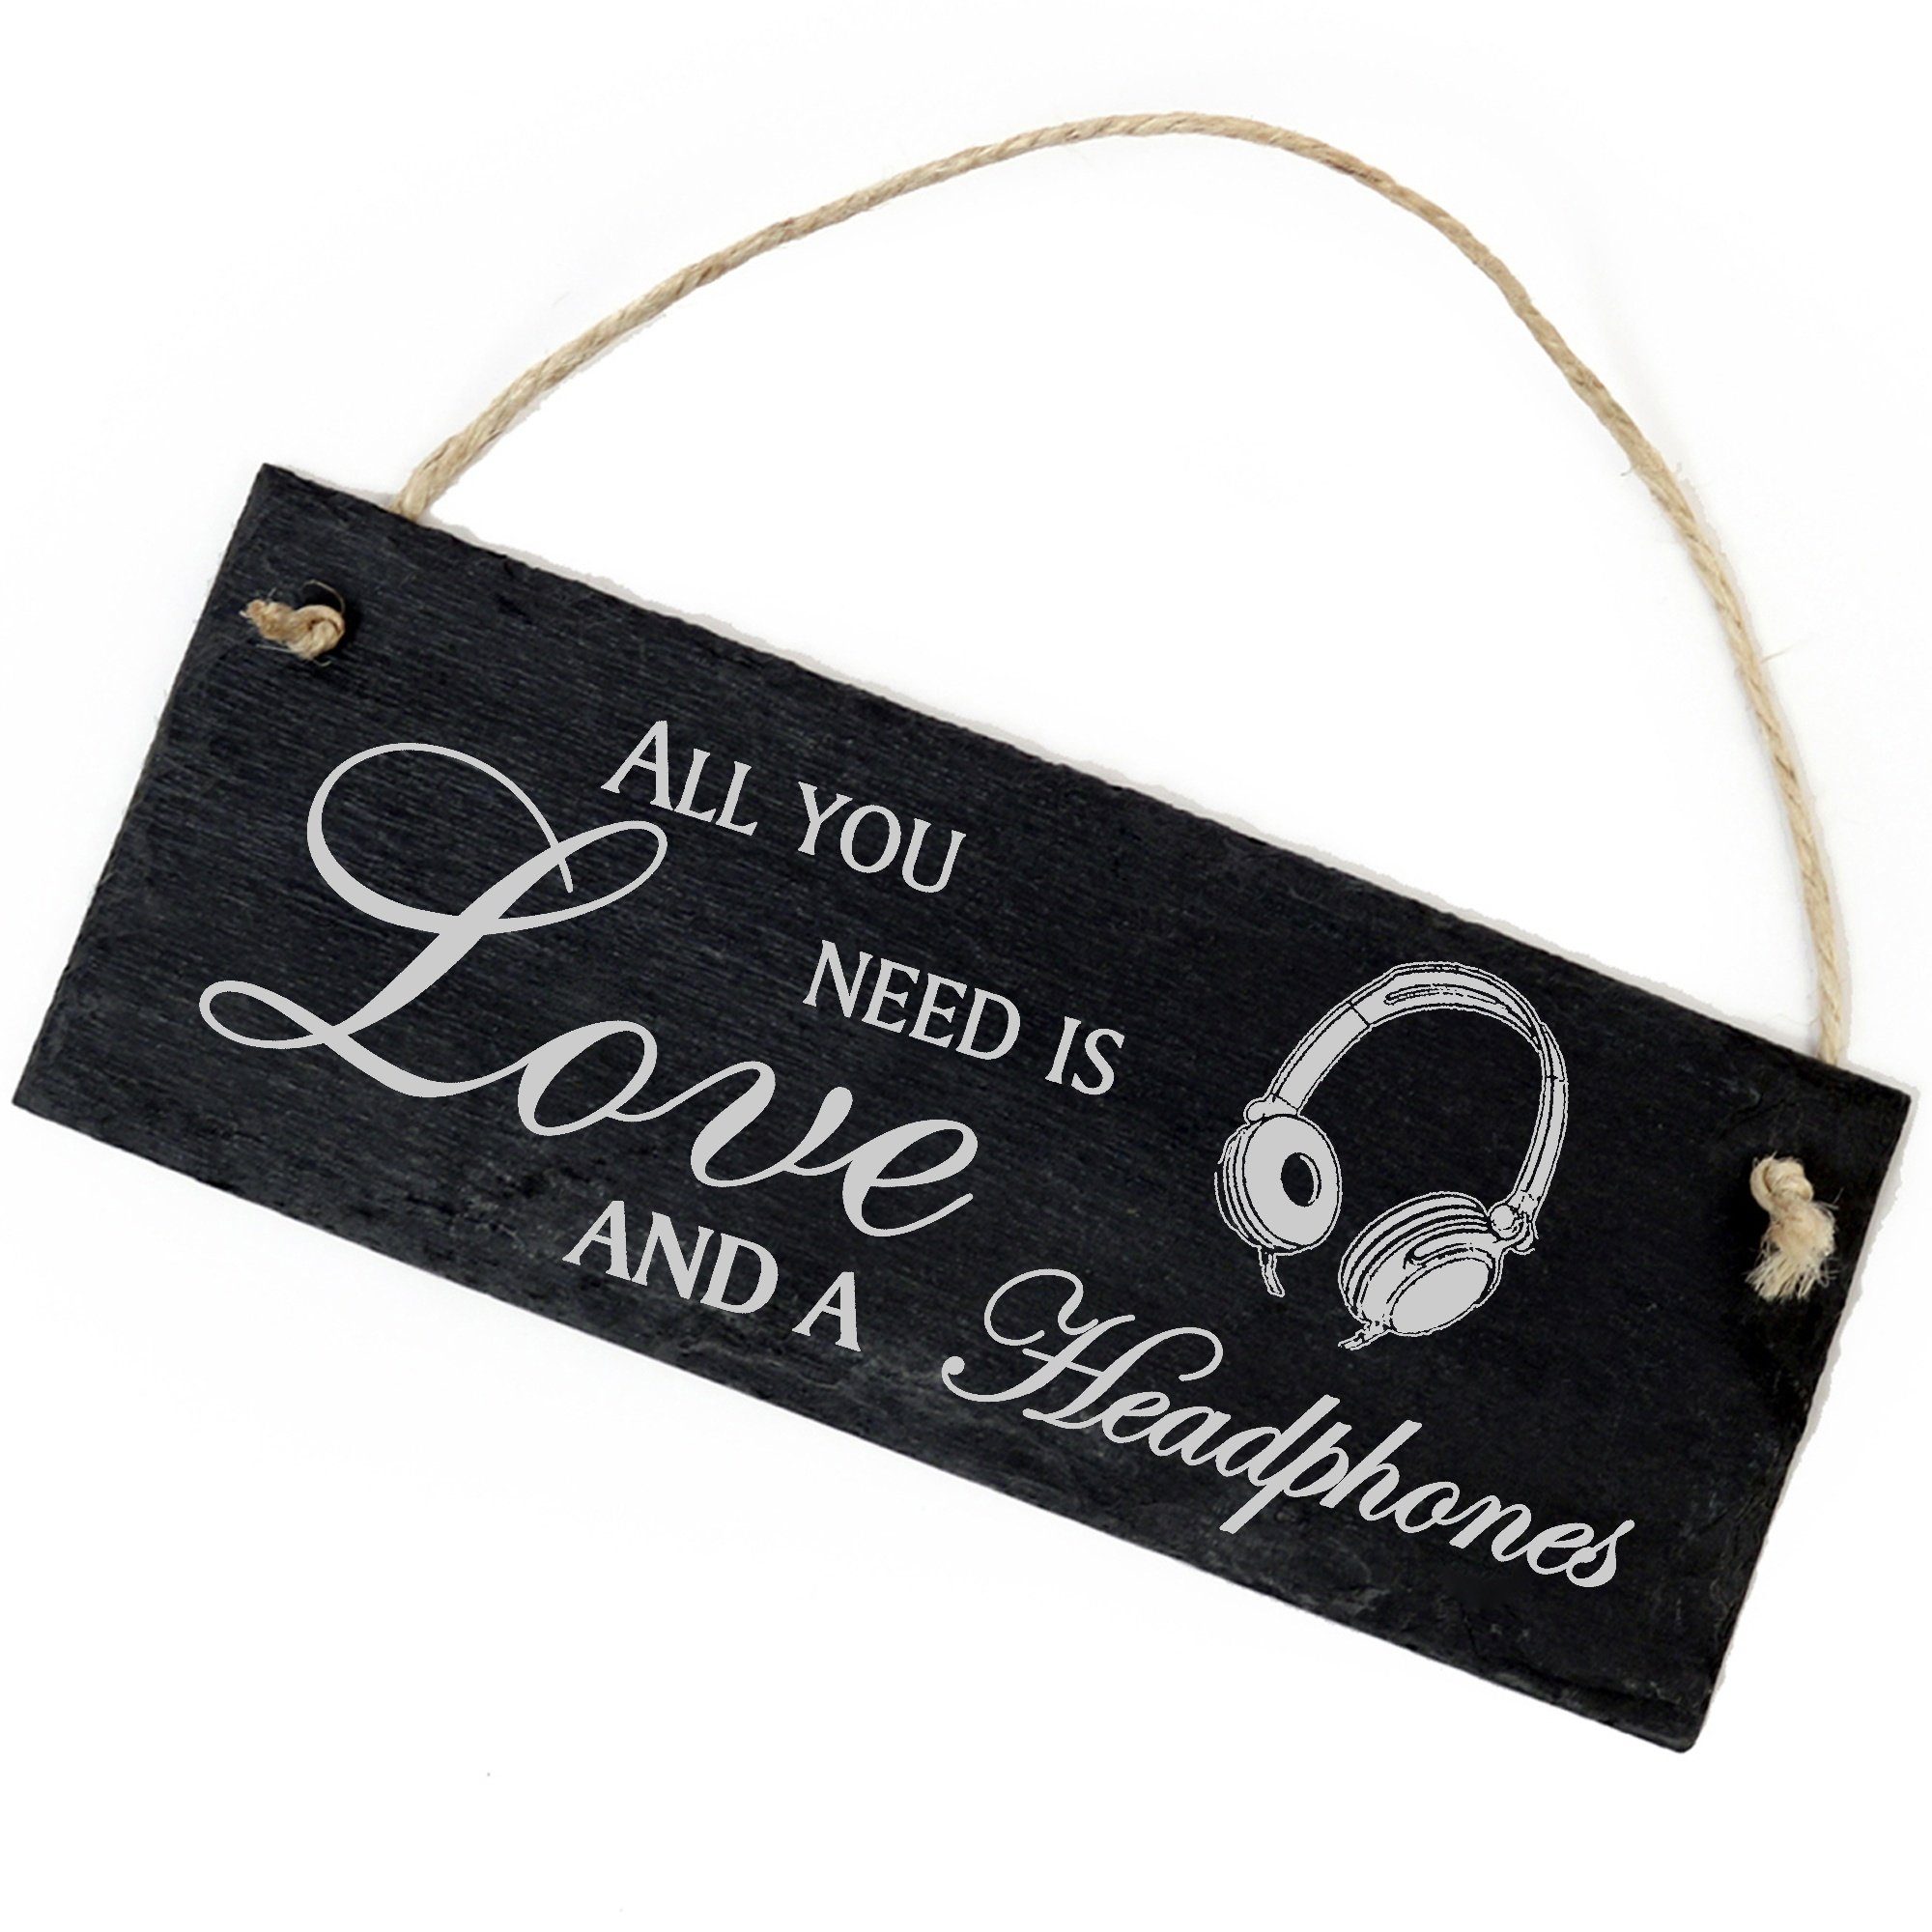 a and Dekolando Headphones Hängedekoration is 22x8cm you Kopfhörer All Love need